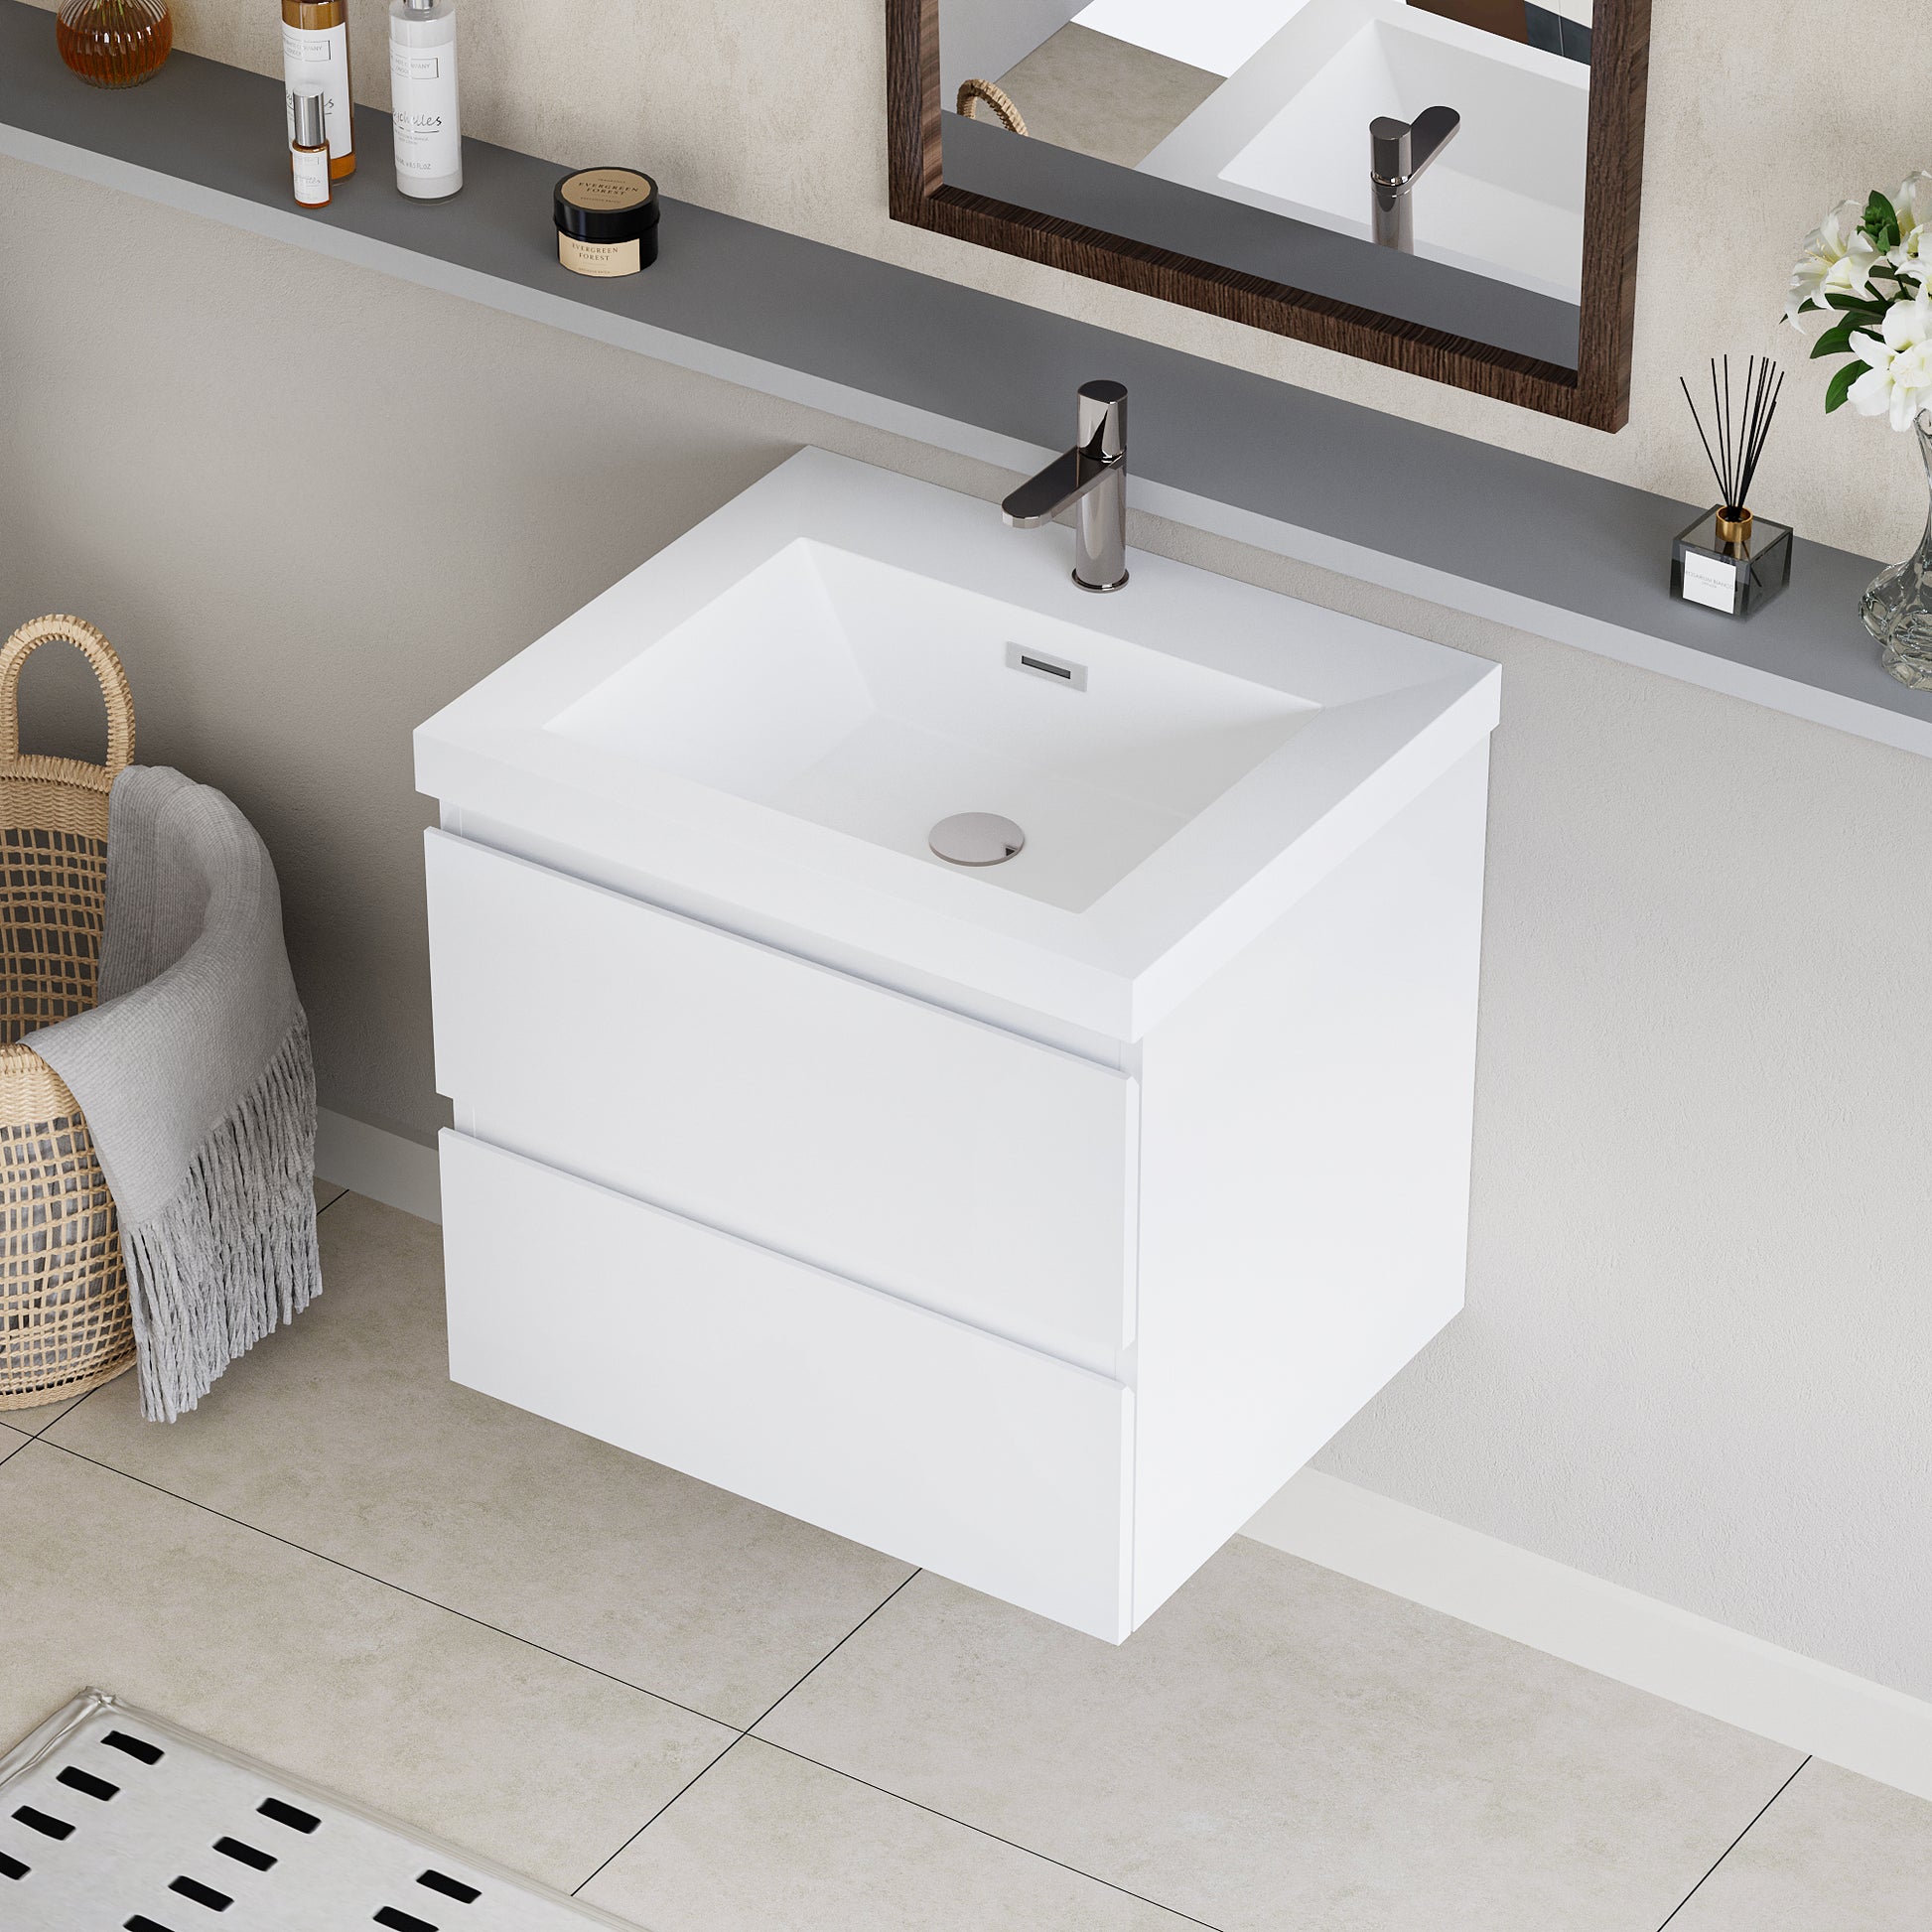 24" Floating Bathroom Vanity with Sink, Modern Wall white-mdf